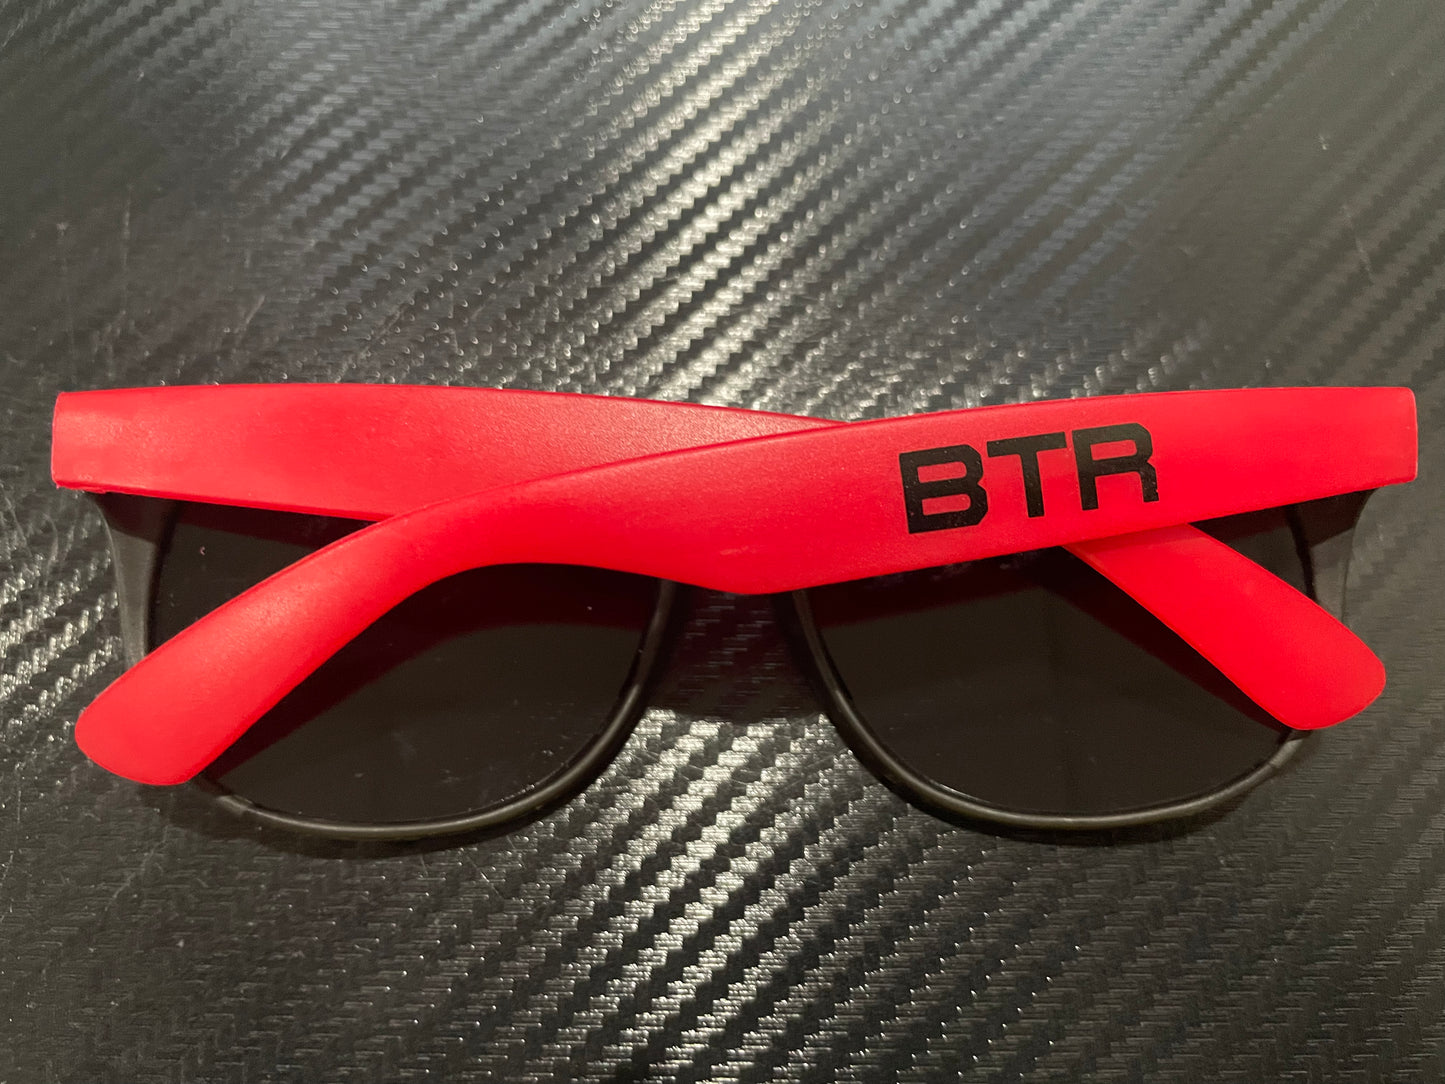 BTR Branded Sunglasses